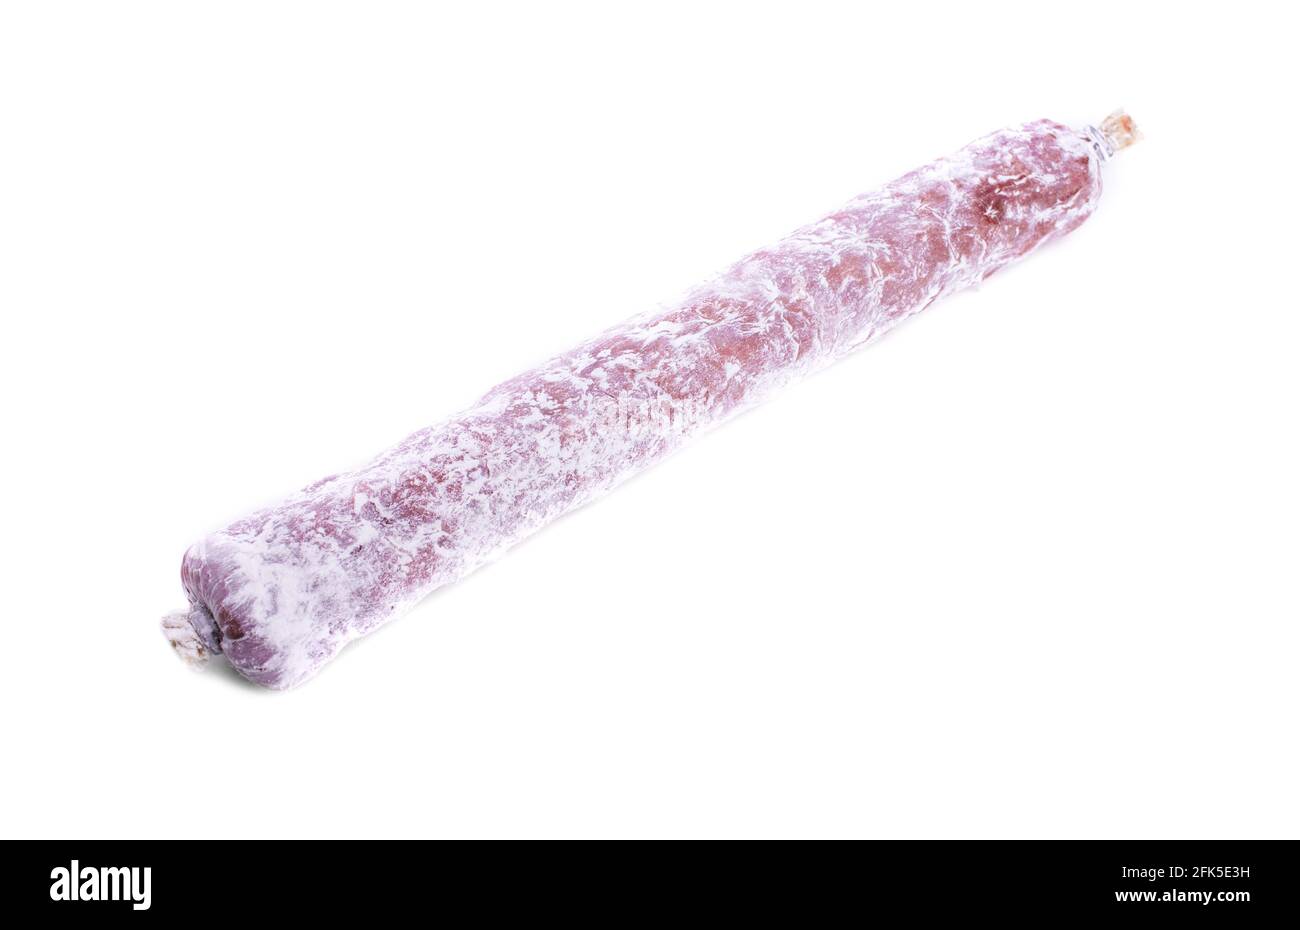 Delicious italian felino salami stick. Isolated on a white background. Stock Photo